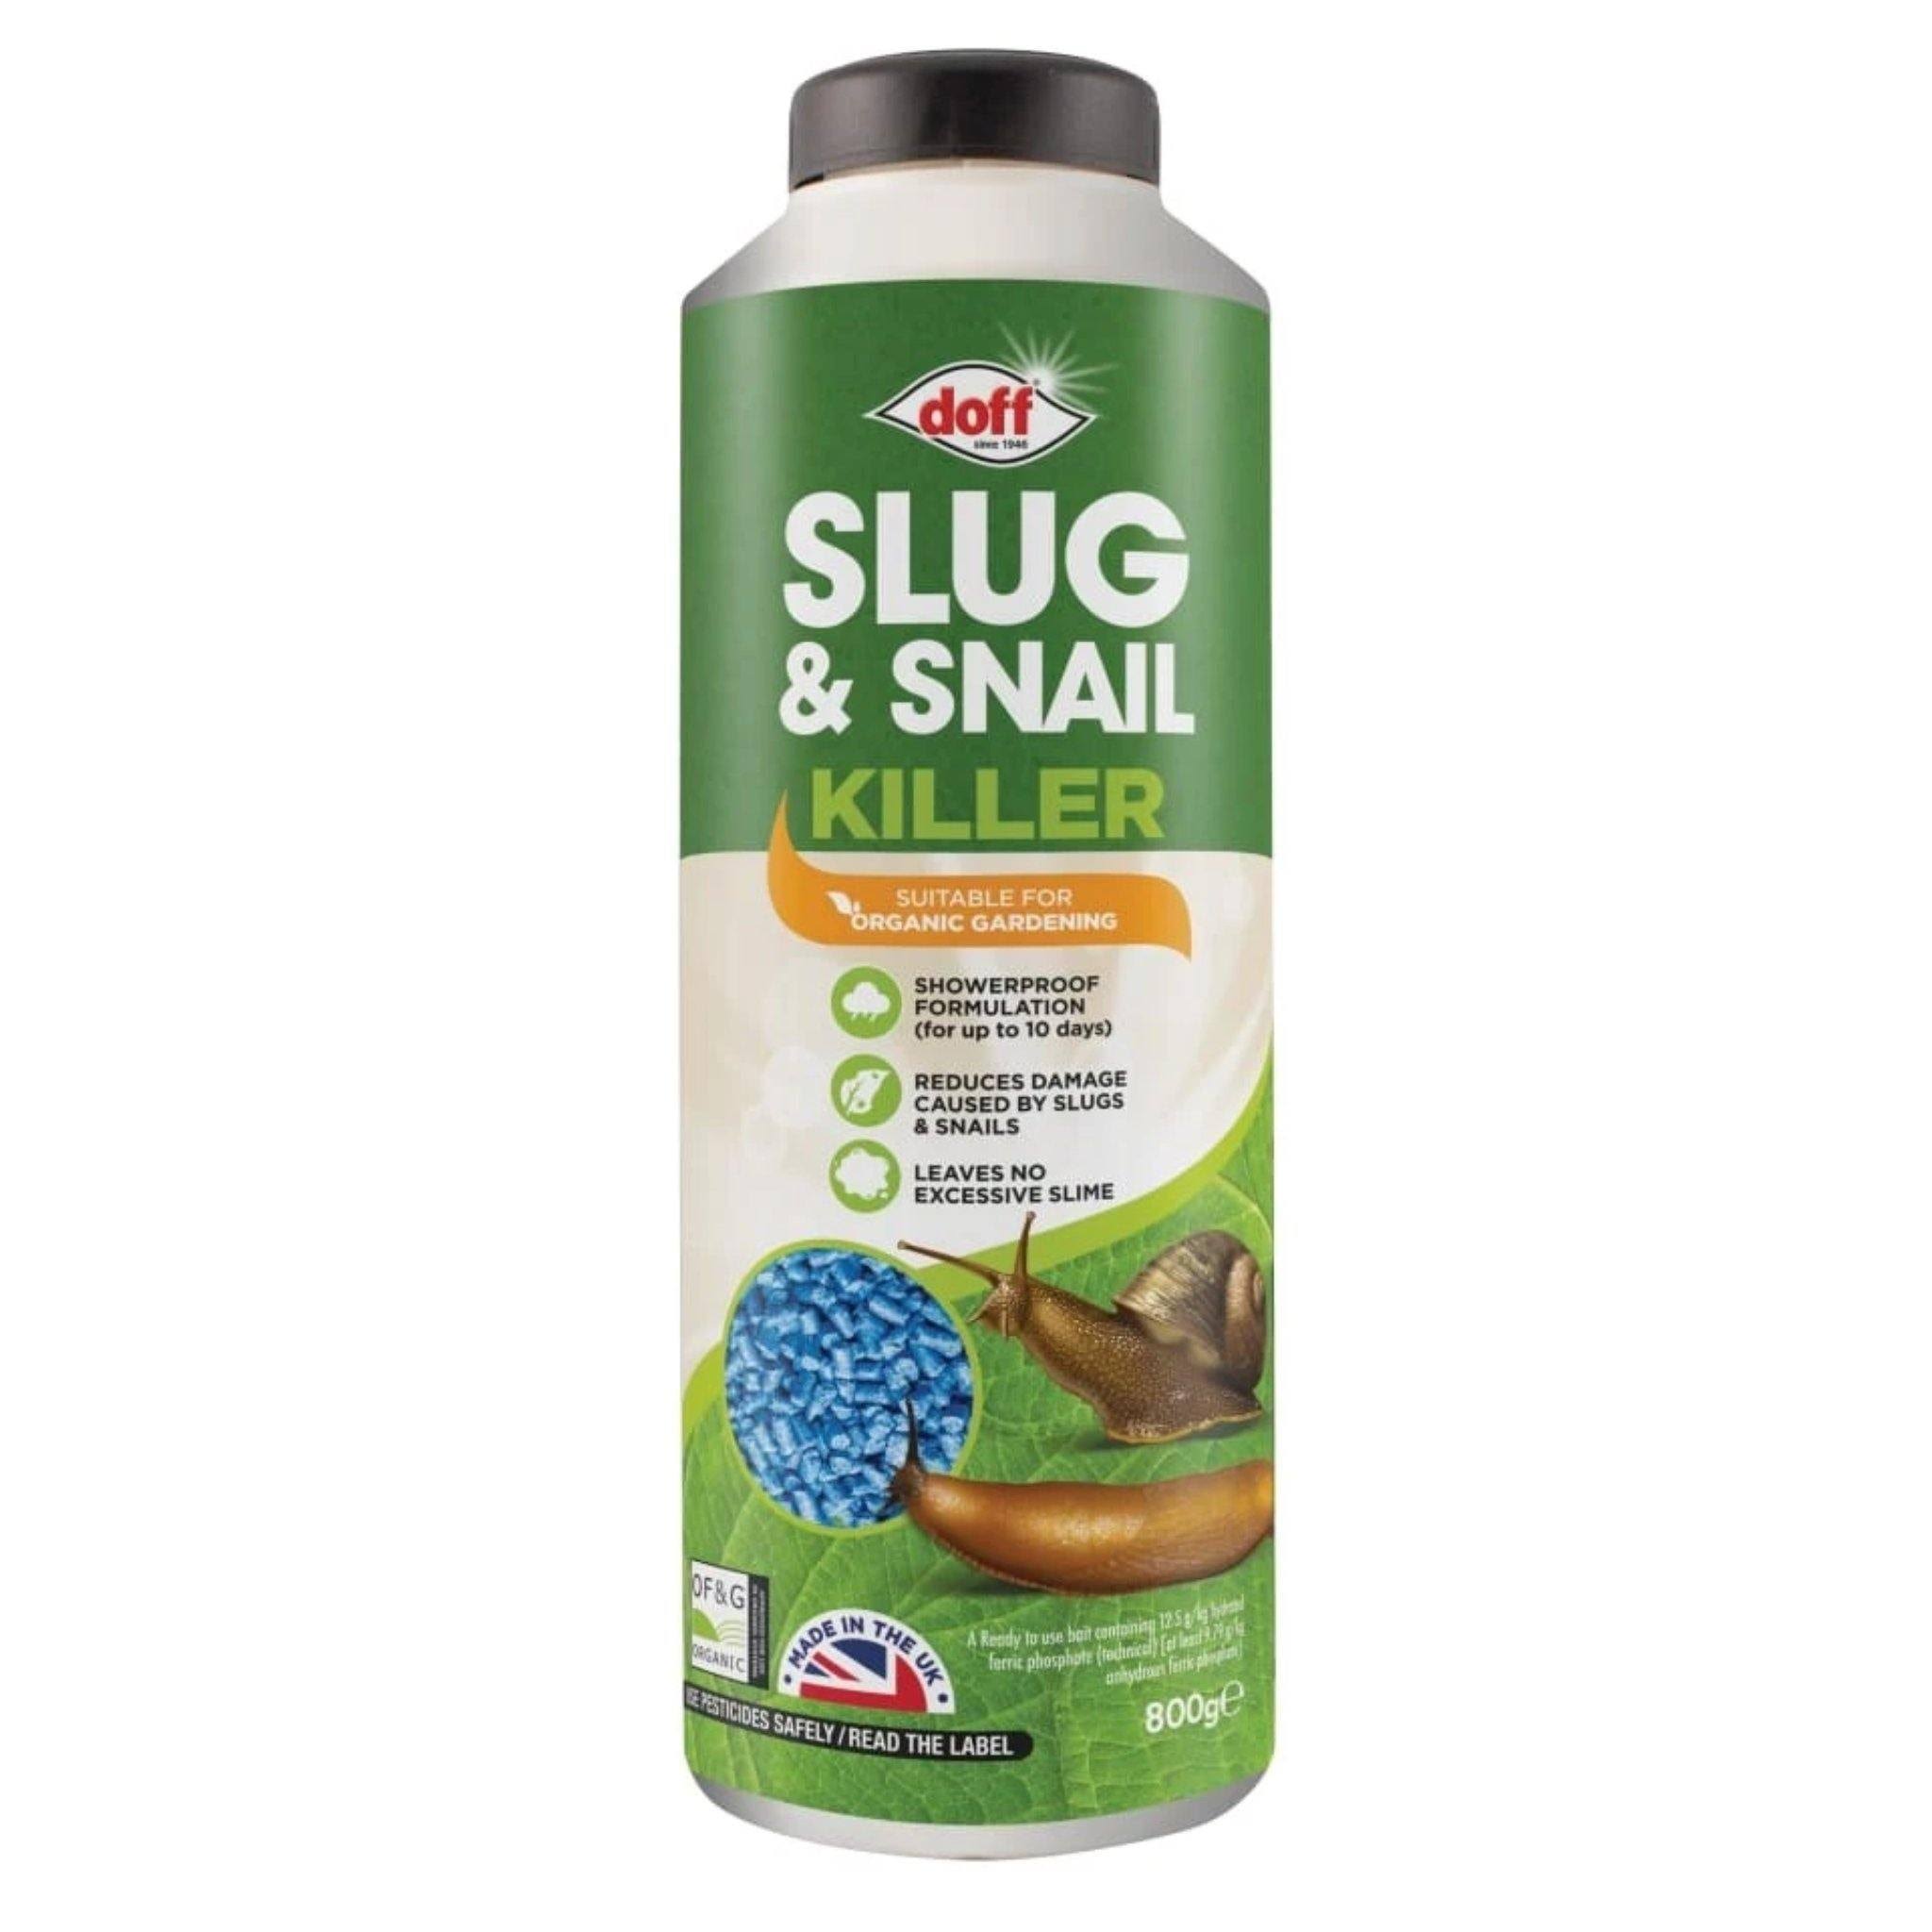 Doff - Slug & Snail Killer - 800g